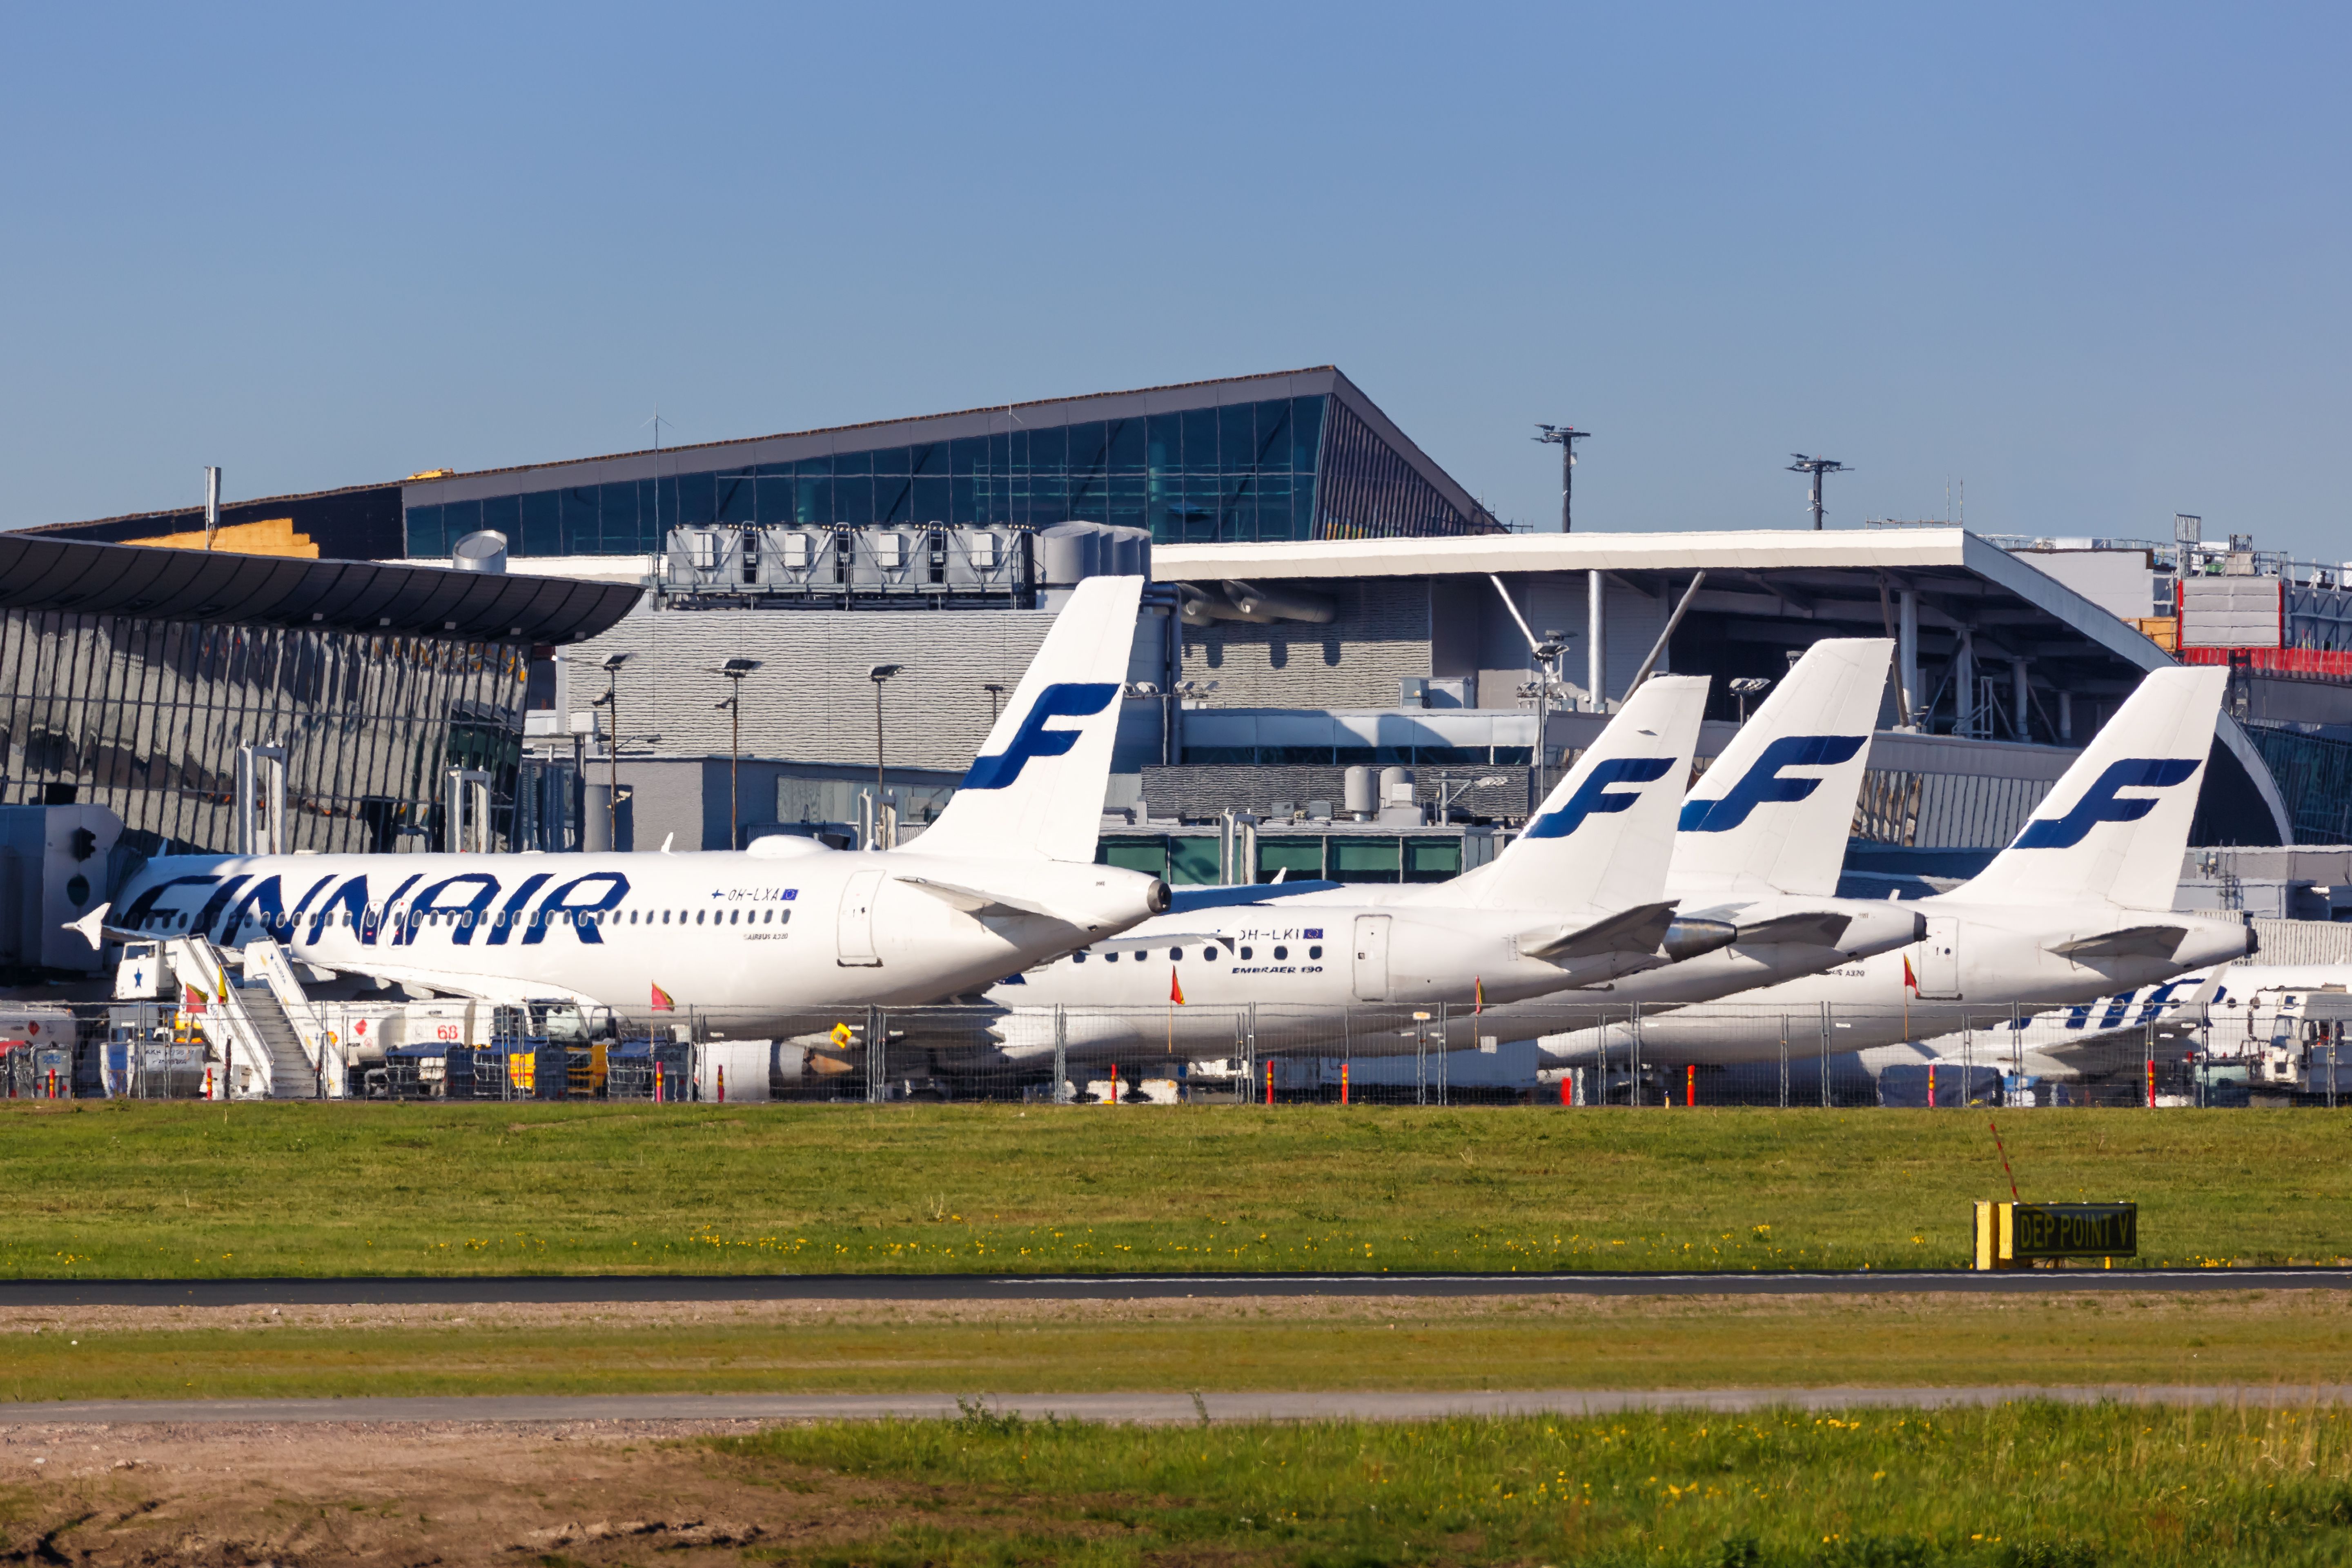 Finnair aircraft parked at the airport